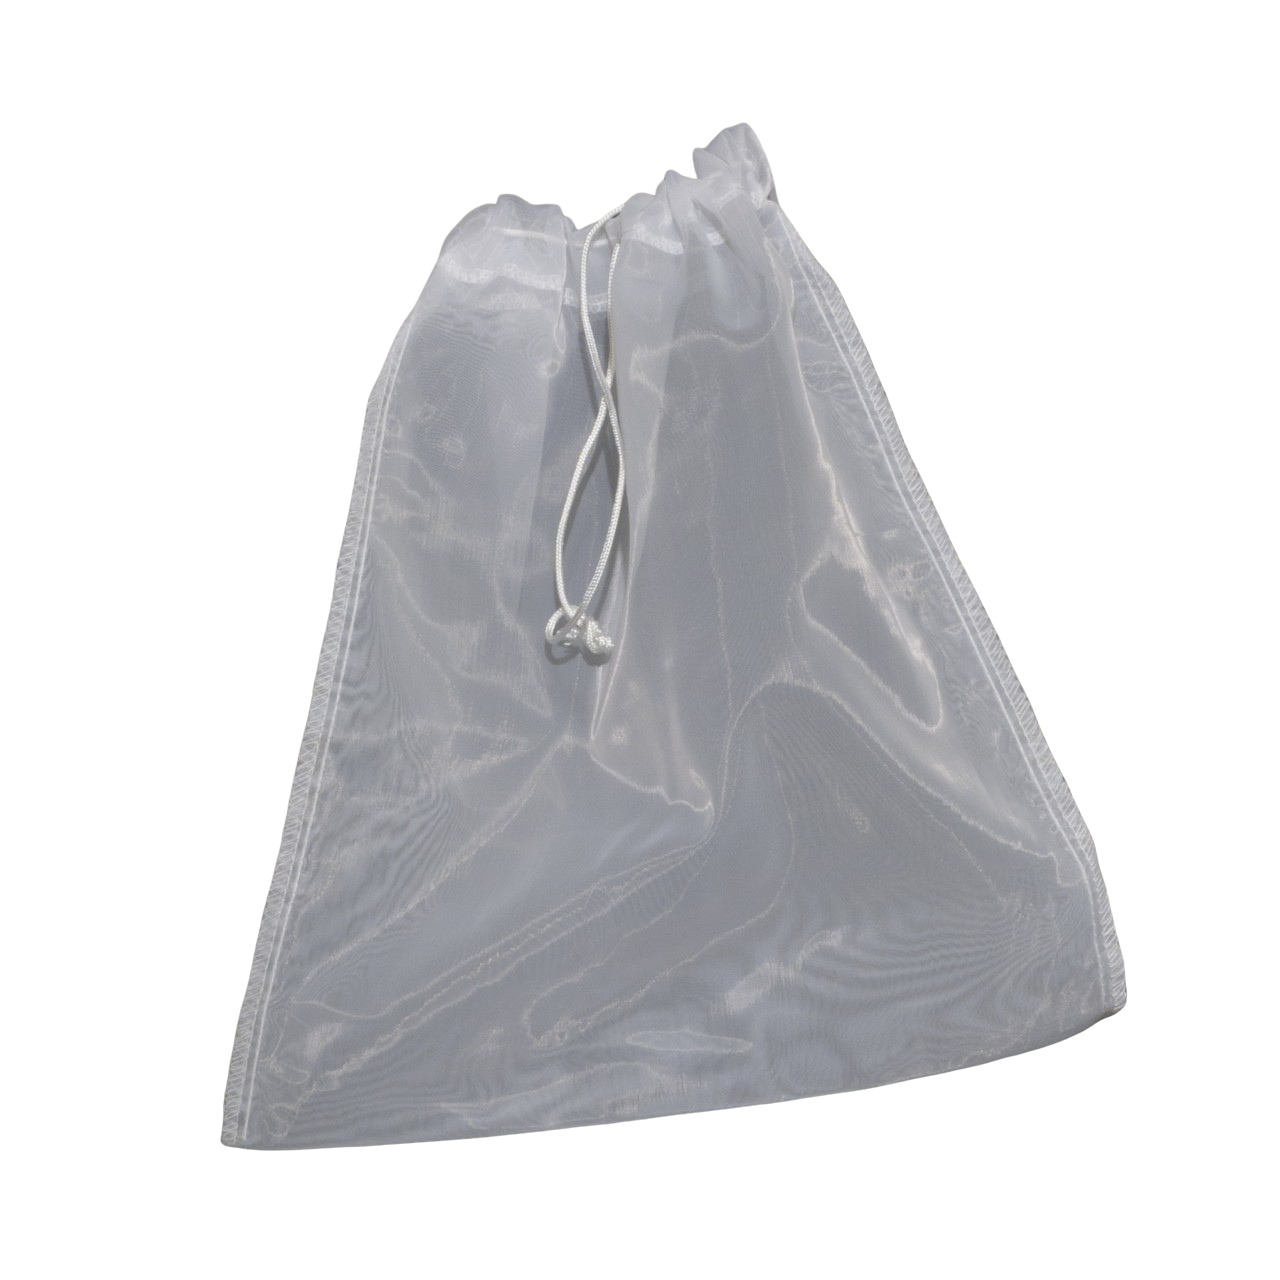 Draining/Straining Bags - Cheese Draining Bag - Strainer For